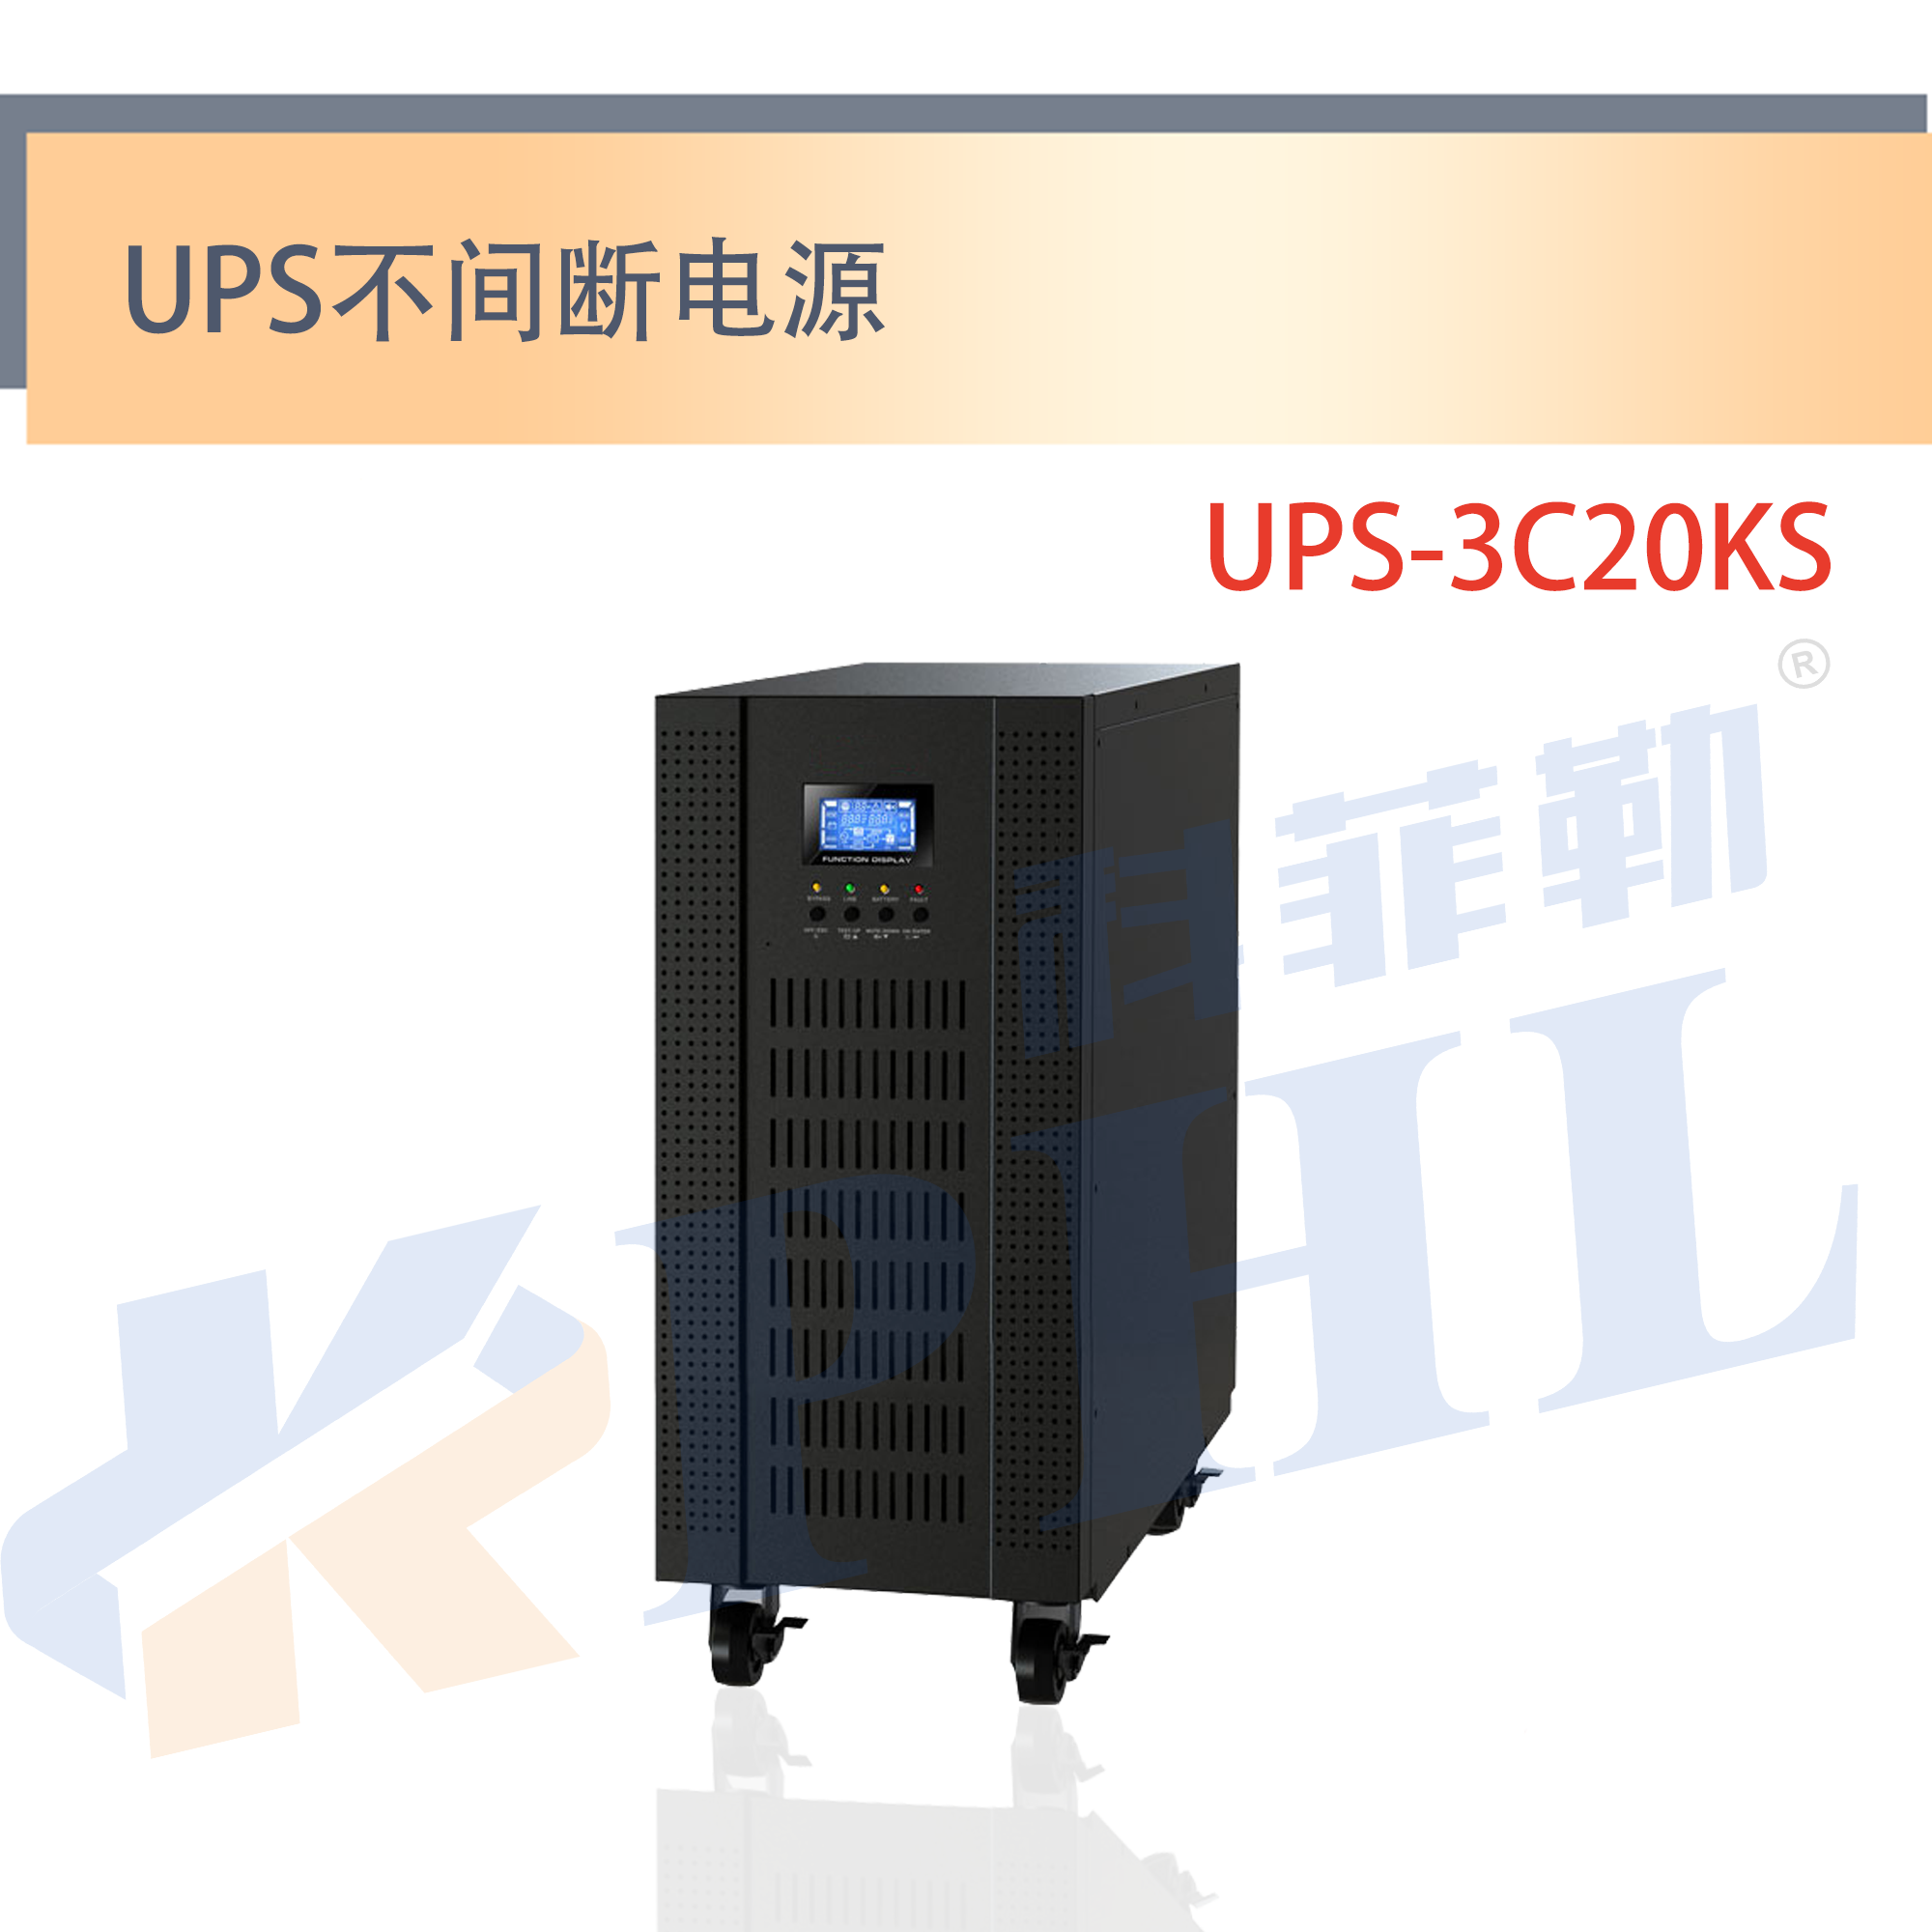 UPS-3C20KS